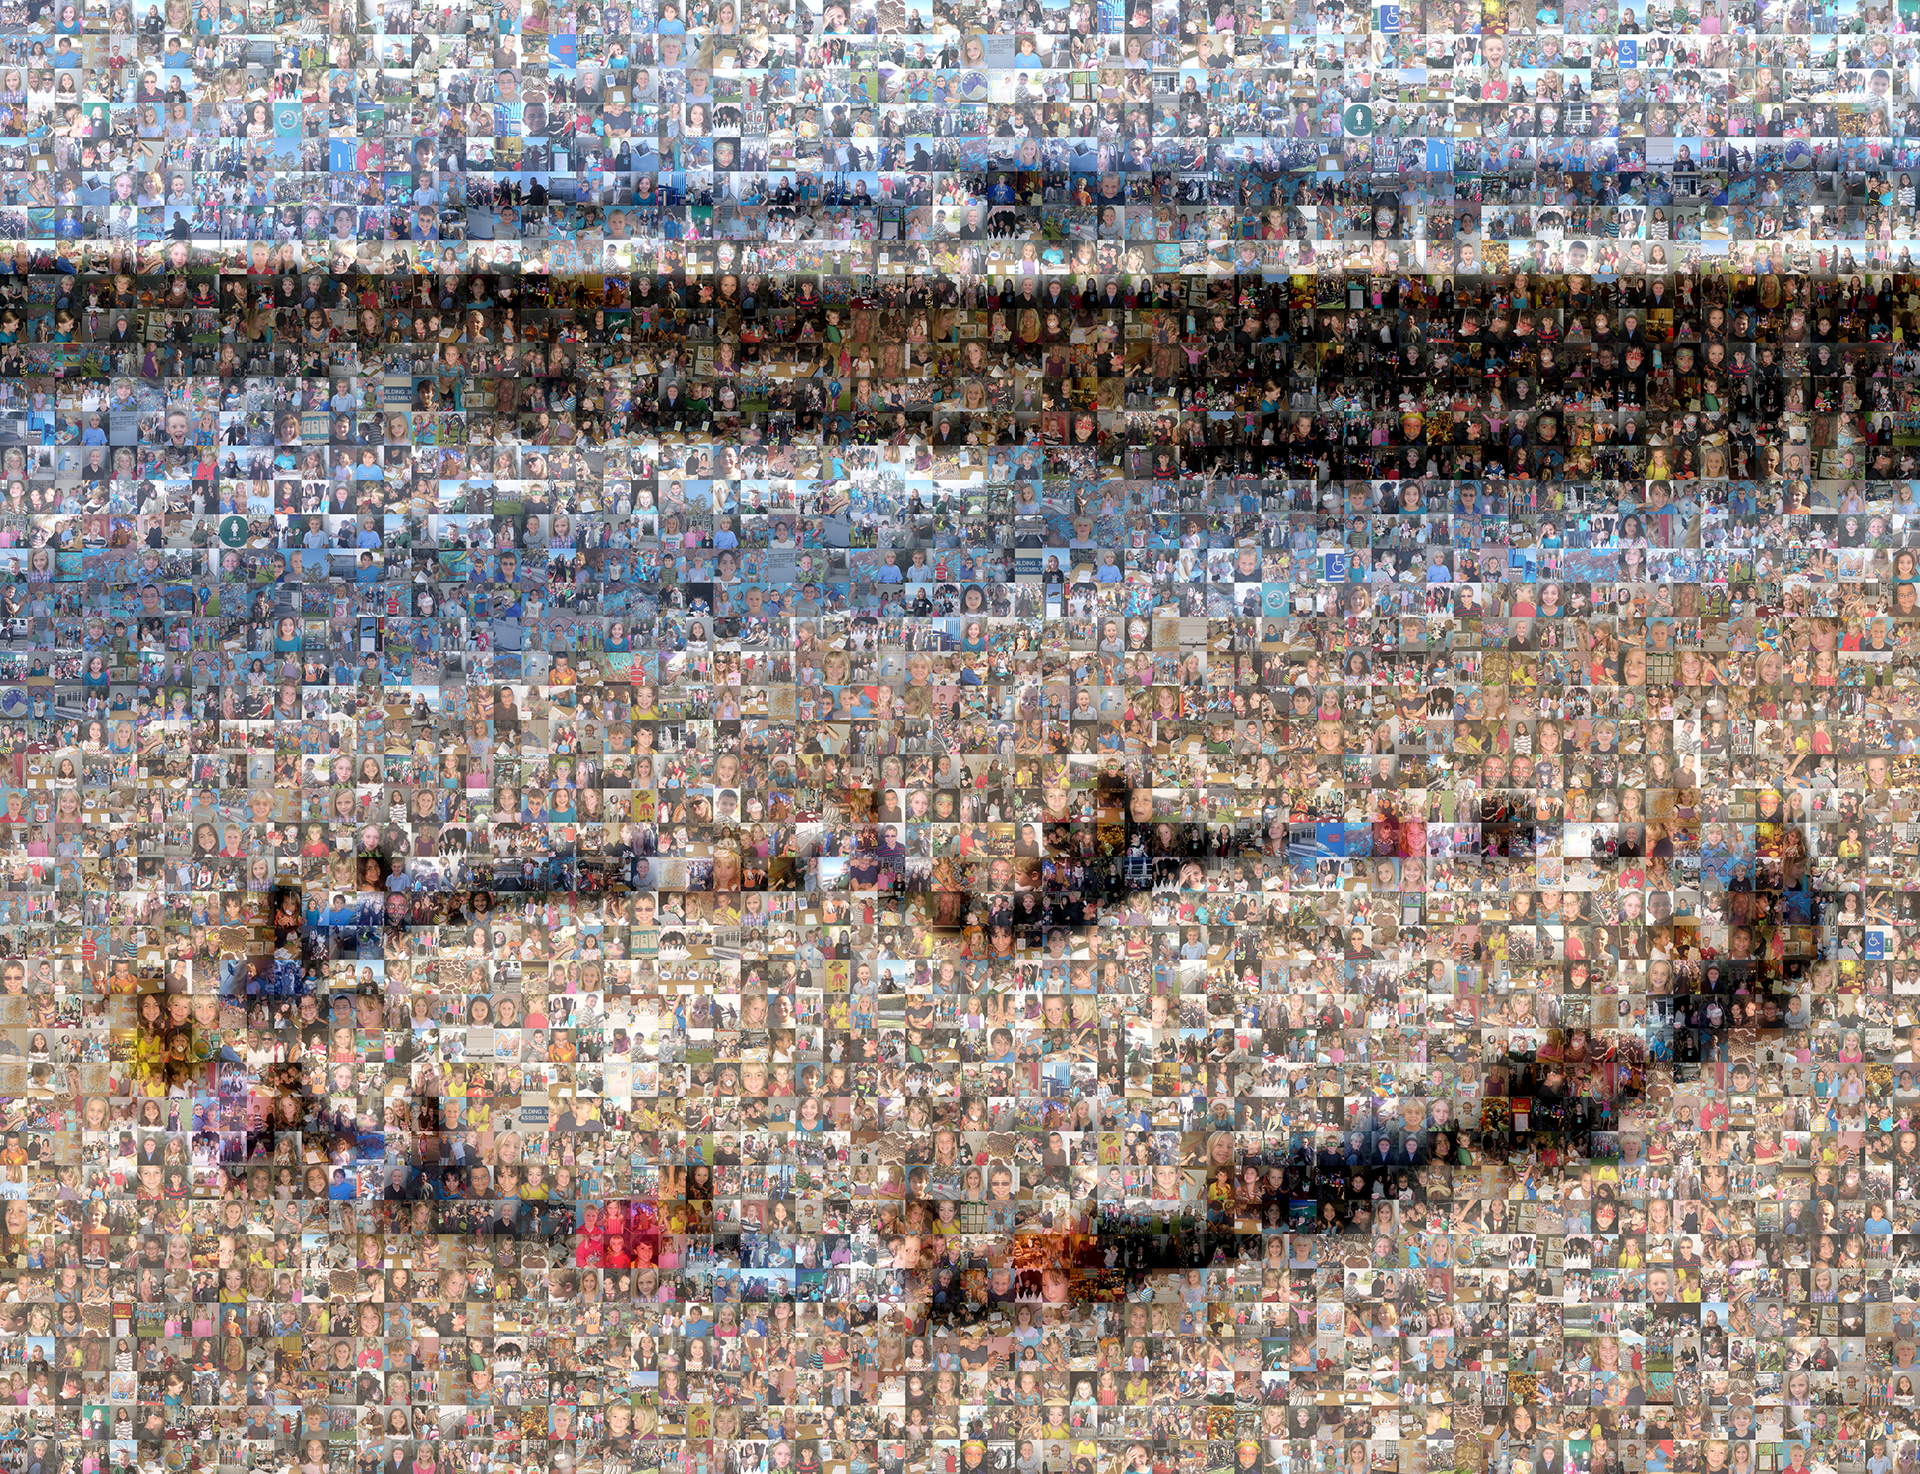 photo mosaic created using 1,234 customer selected photos